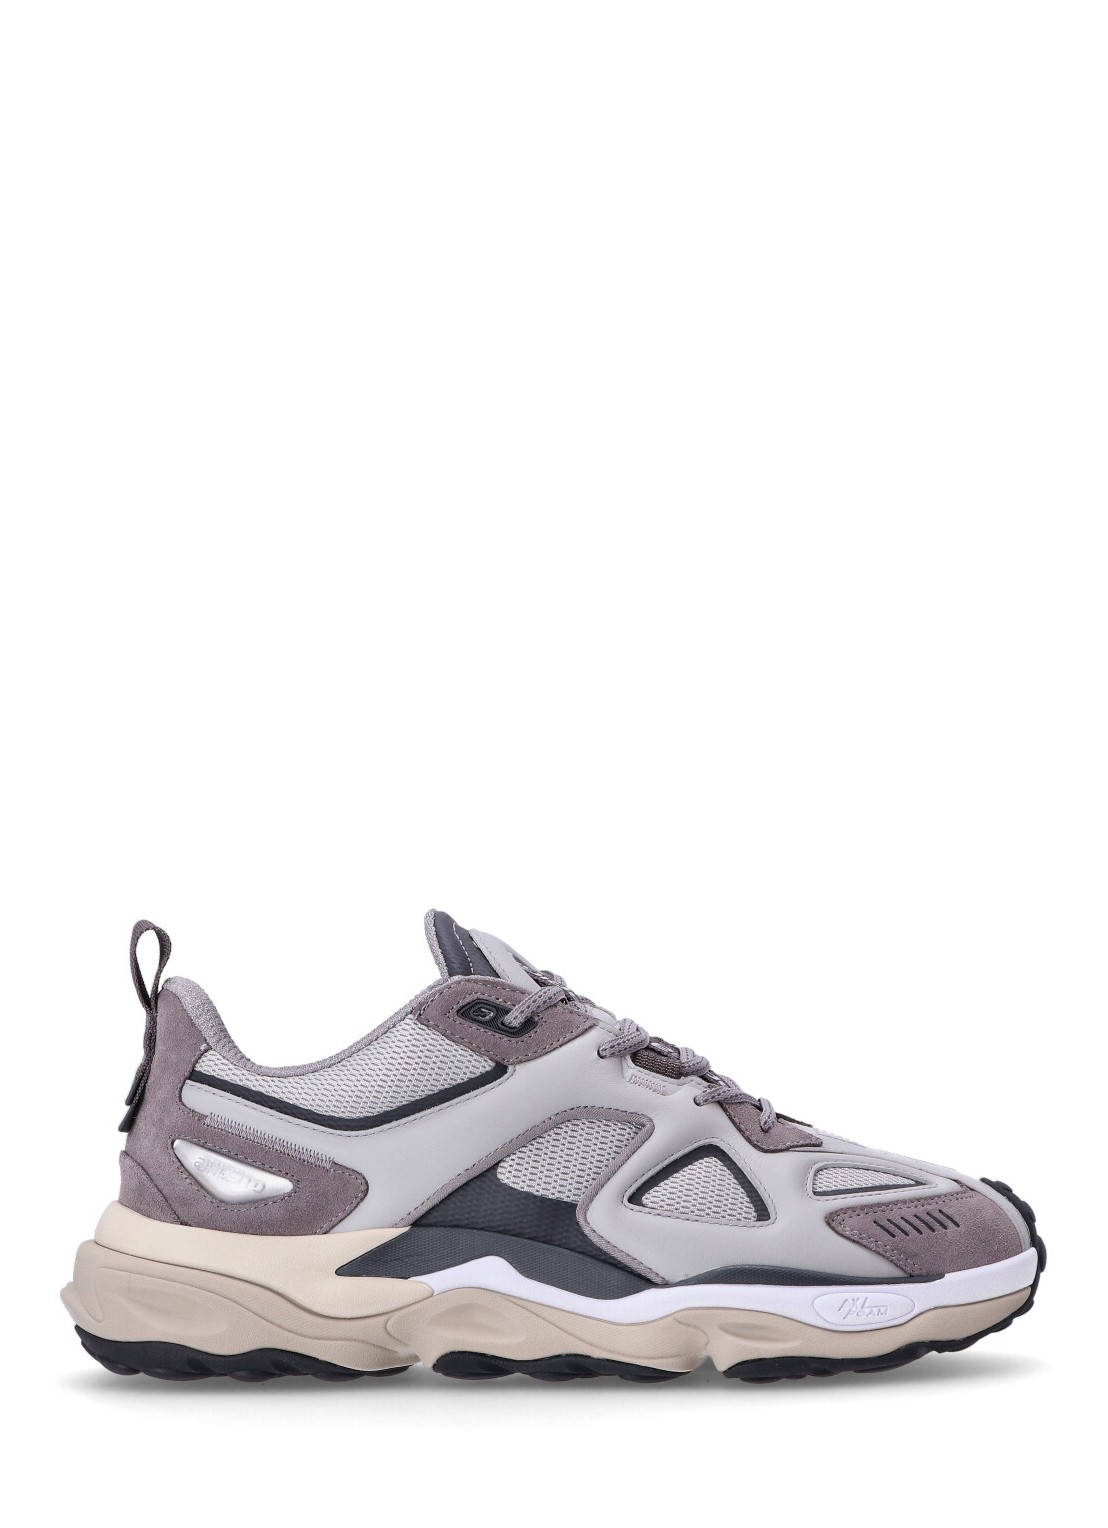 Sneaker axel arigato sneaker man satellite runner f1679002 light grey grey talla 41
 